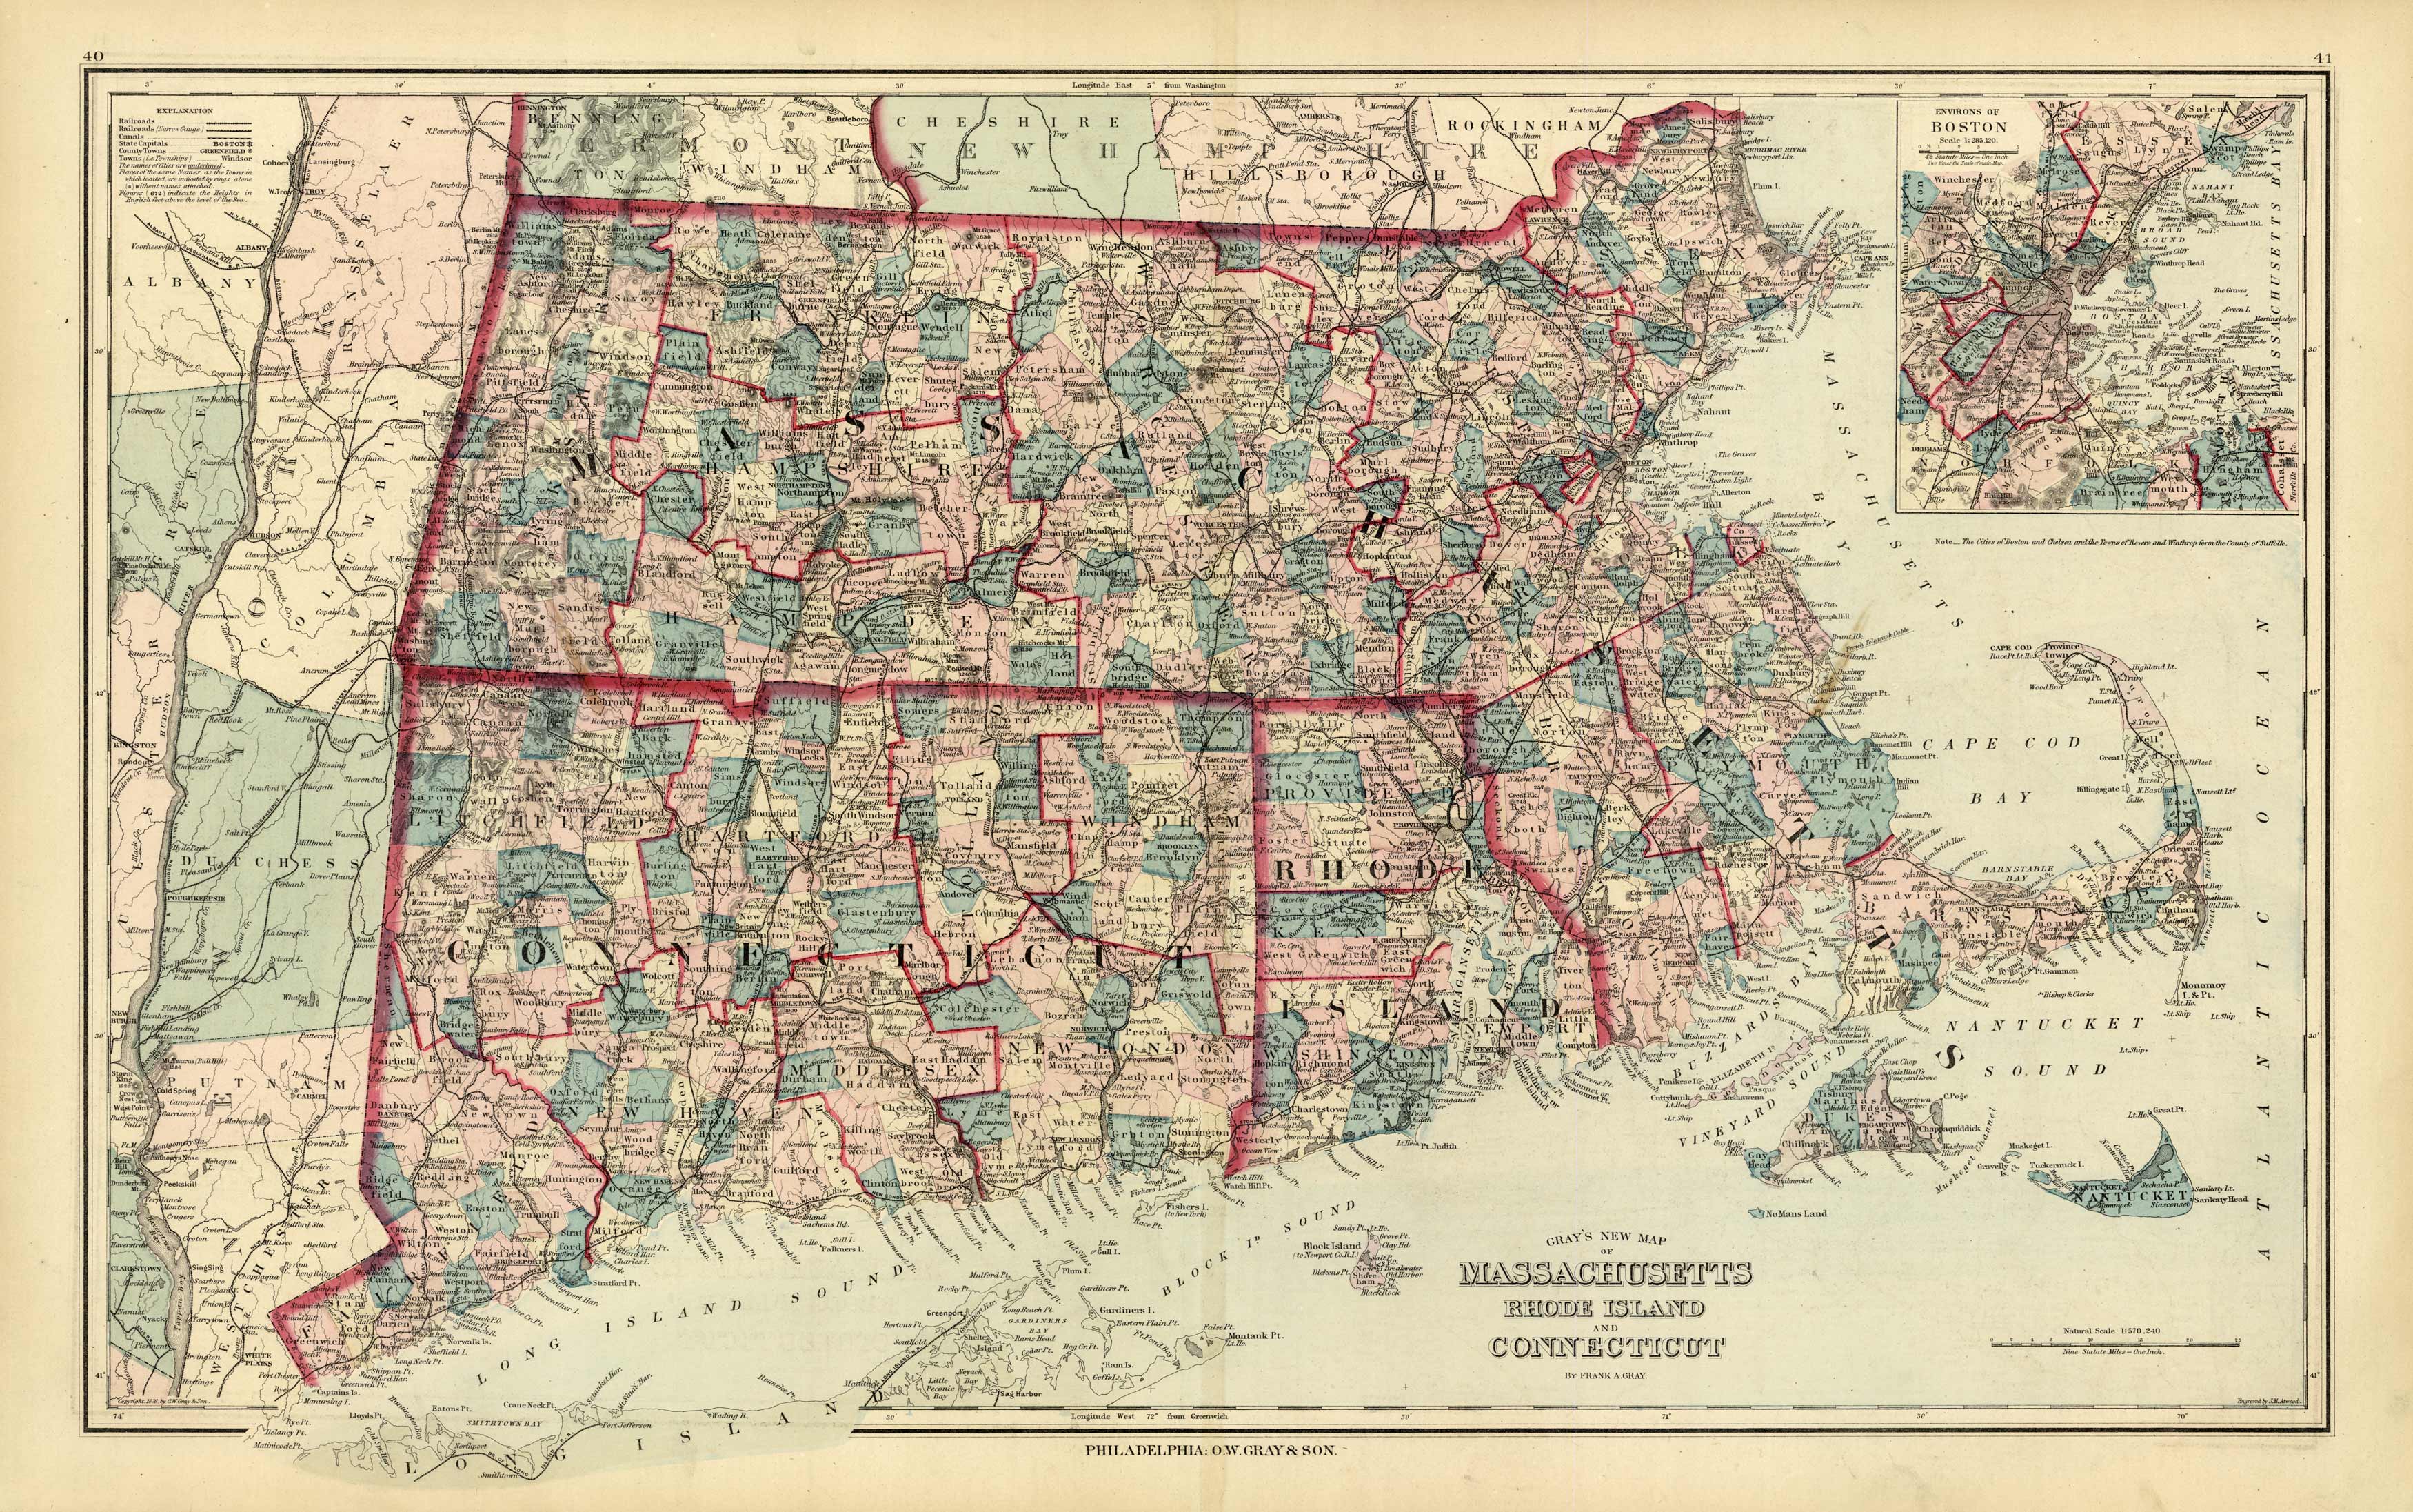 Grays New Map of Massachusetts